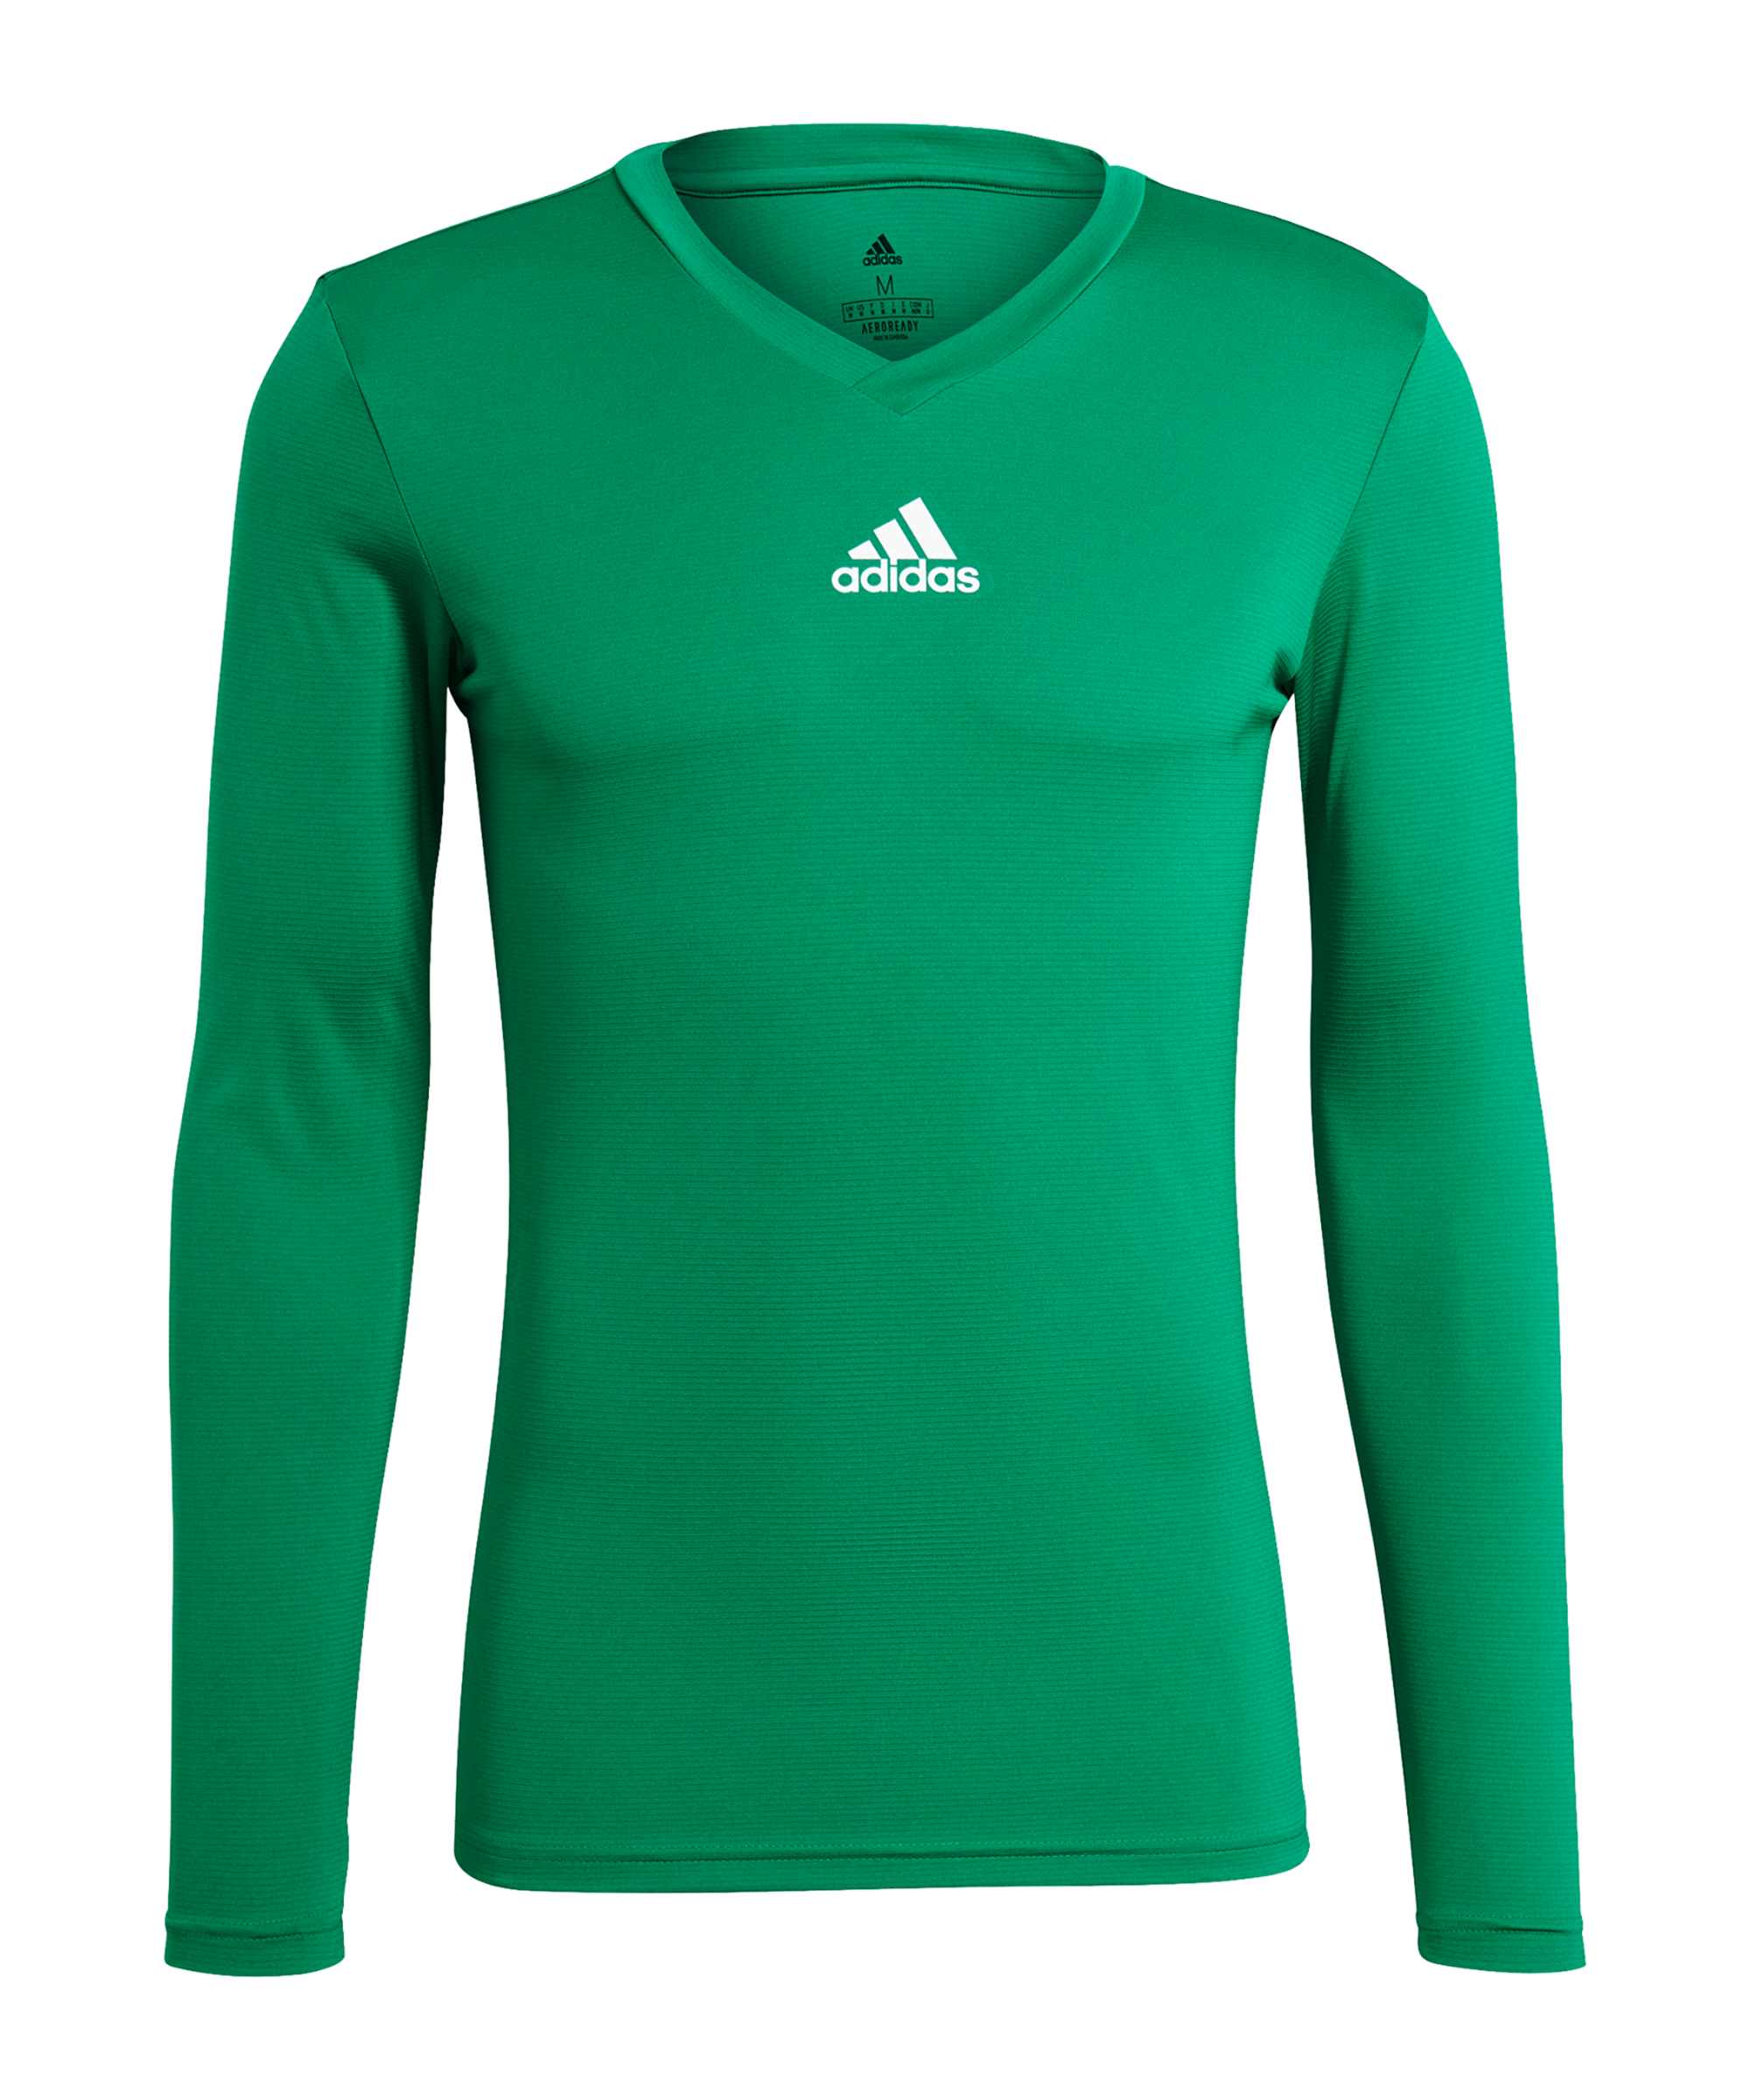 adidas team Base Top long sleeve dark green